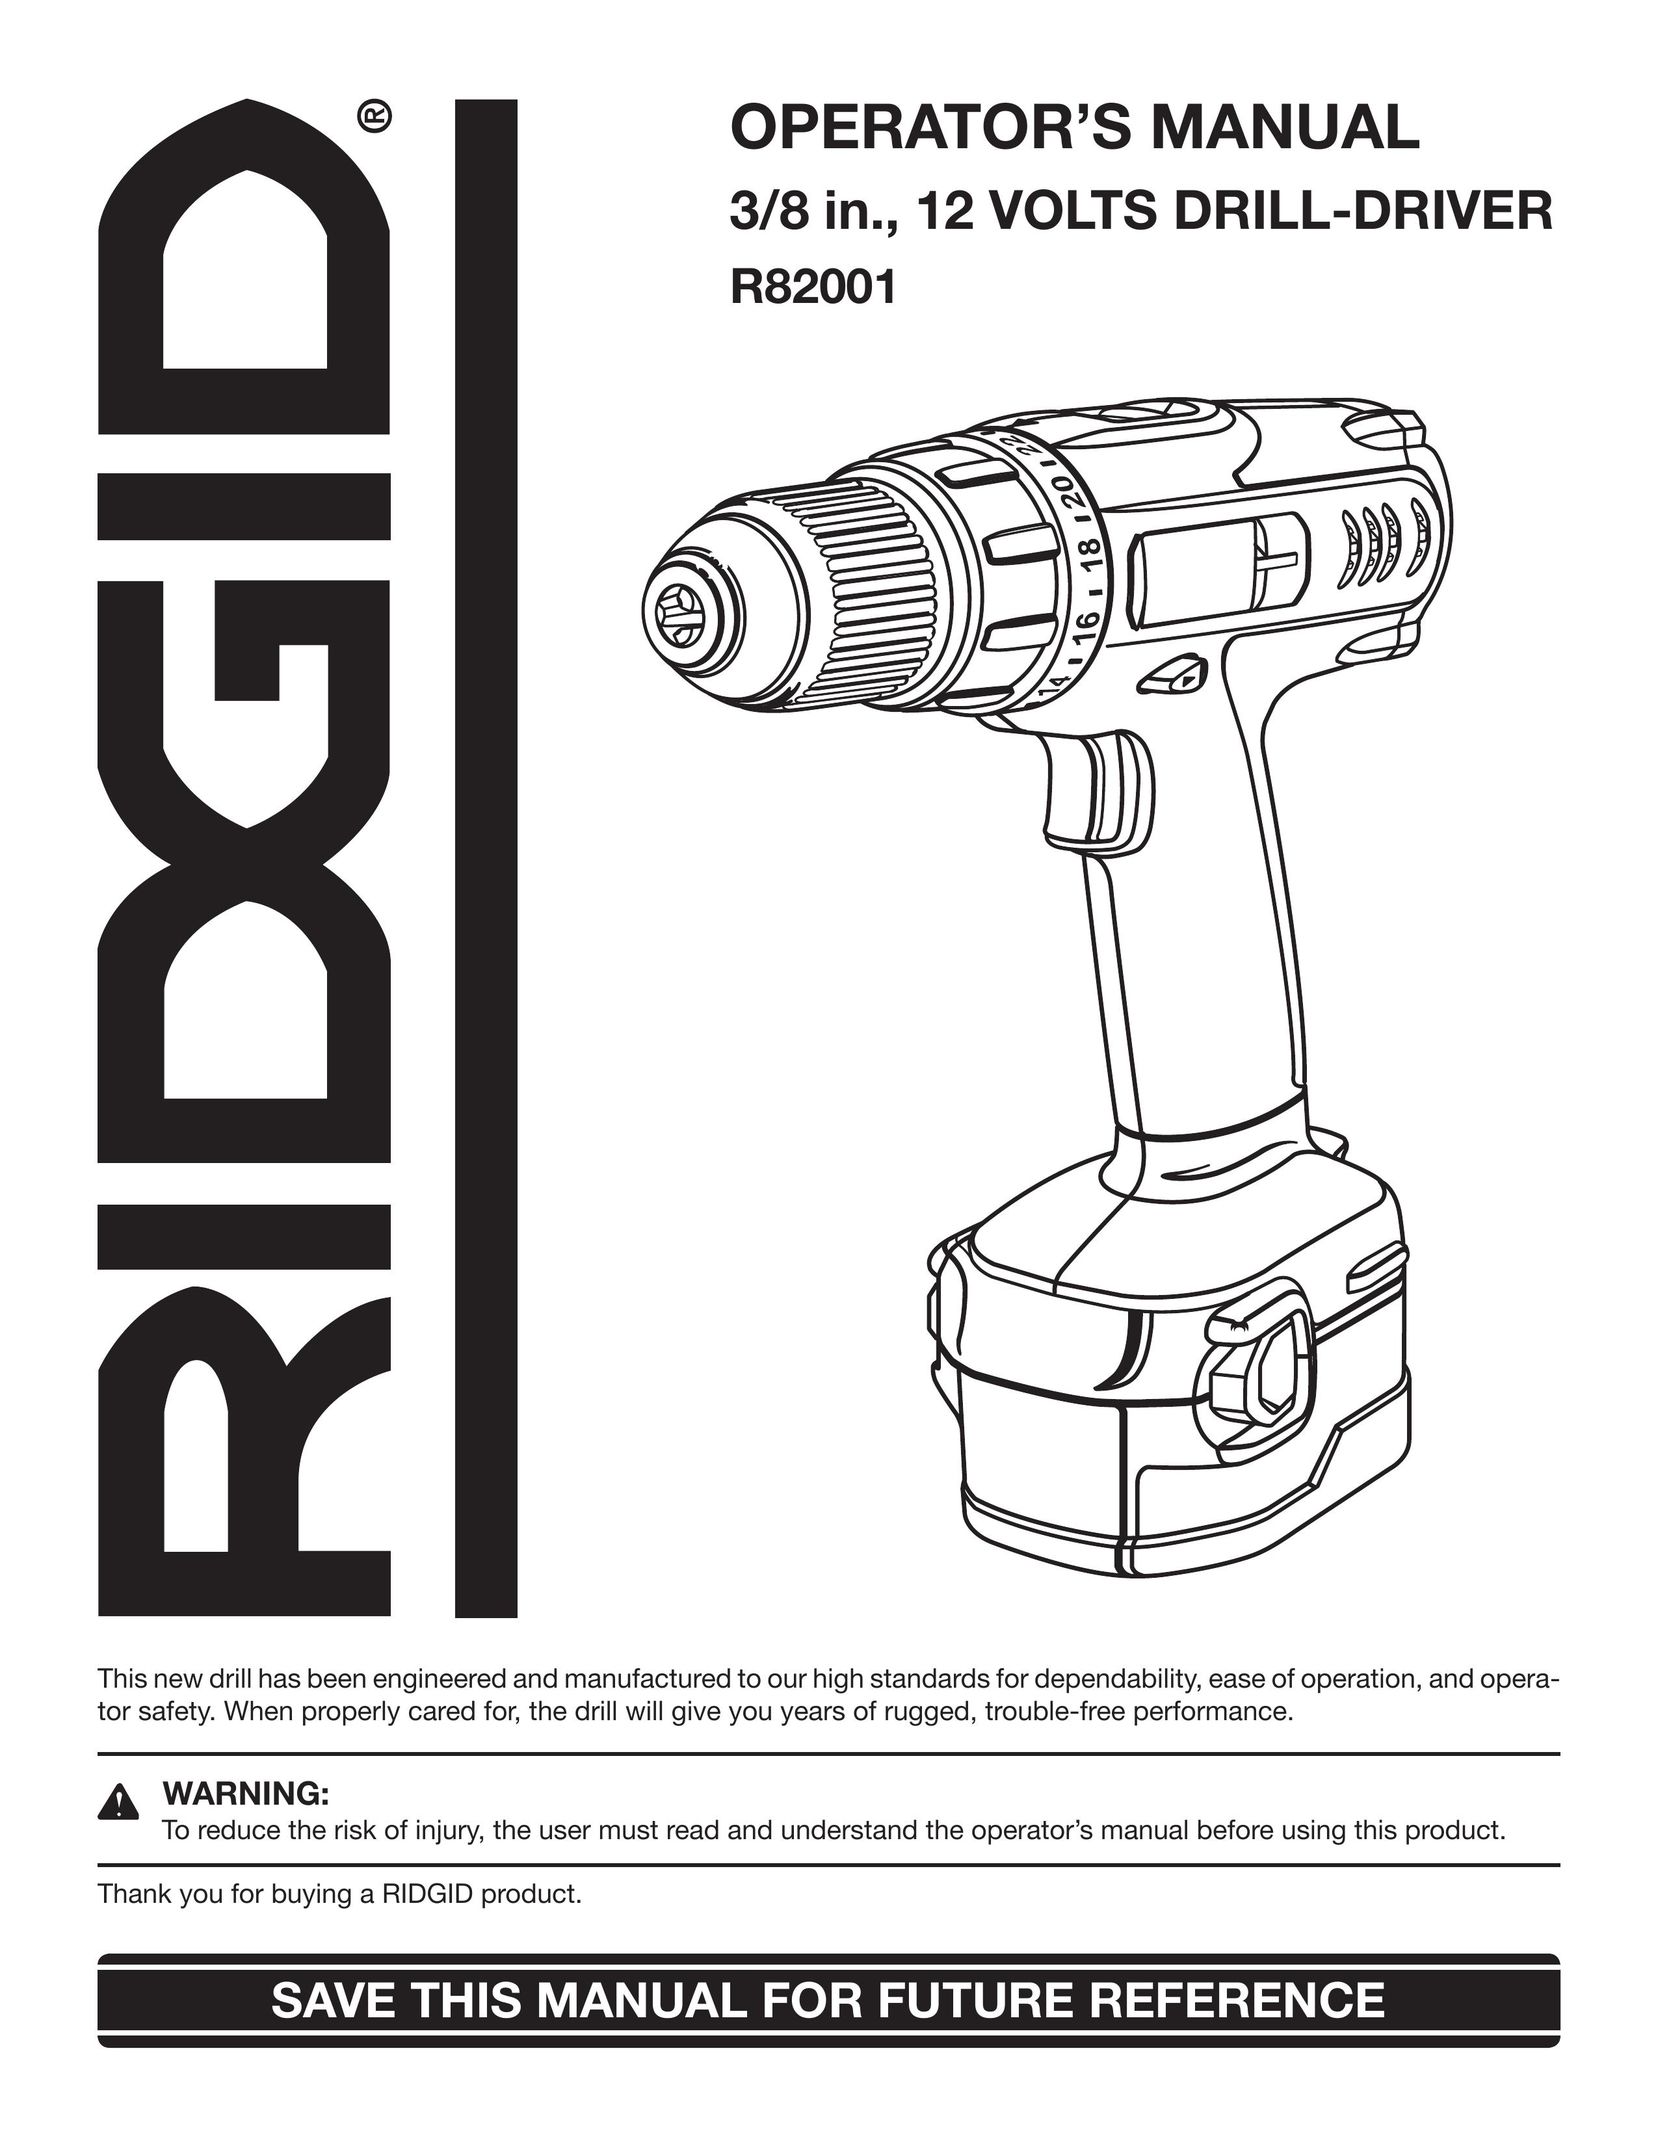 RIDGID R82001 Drill User Manual